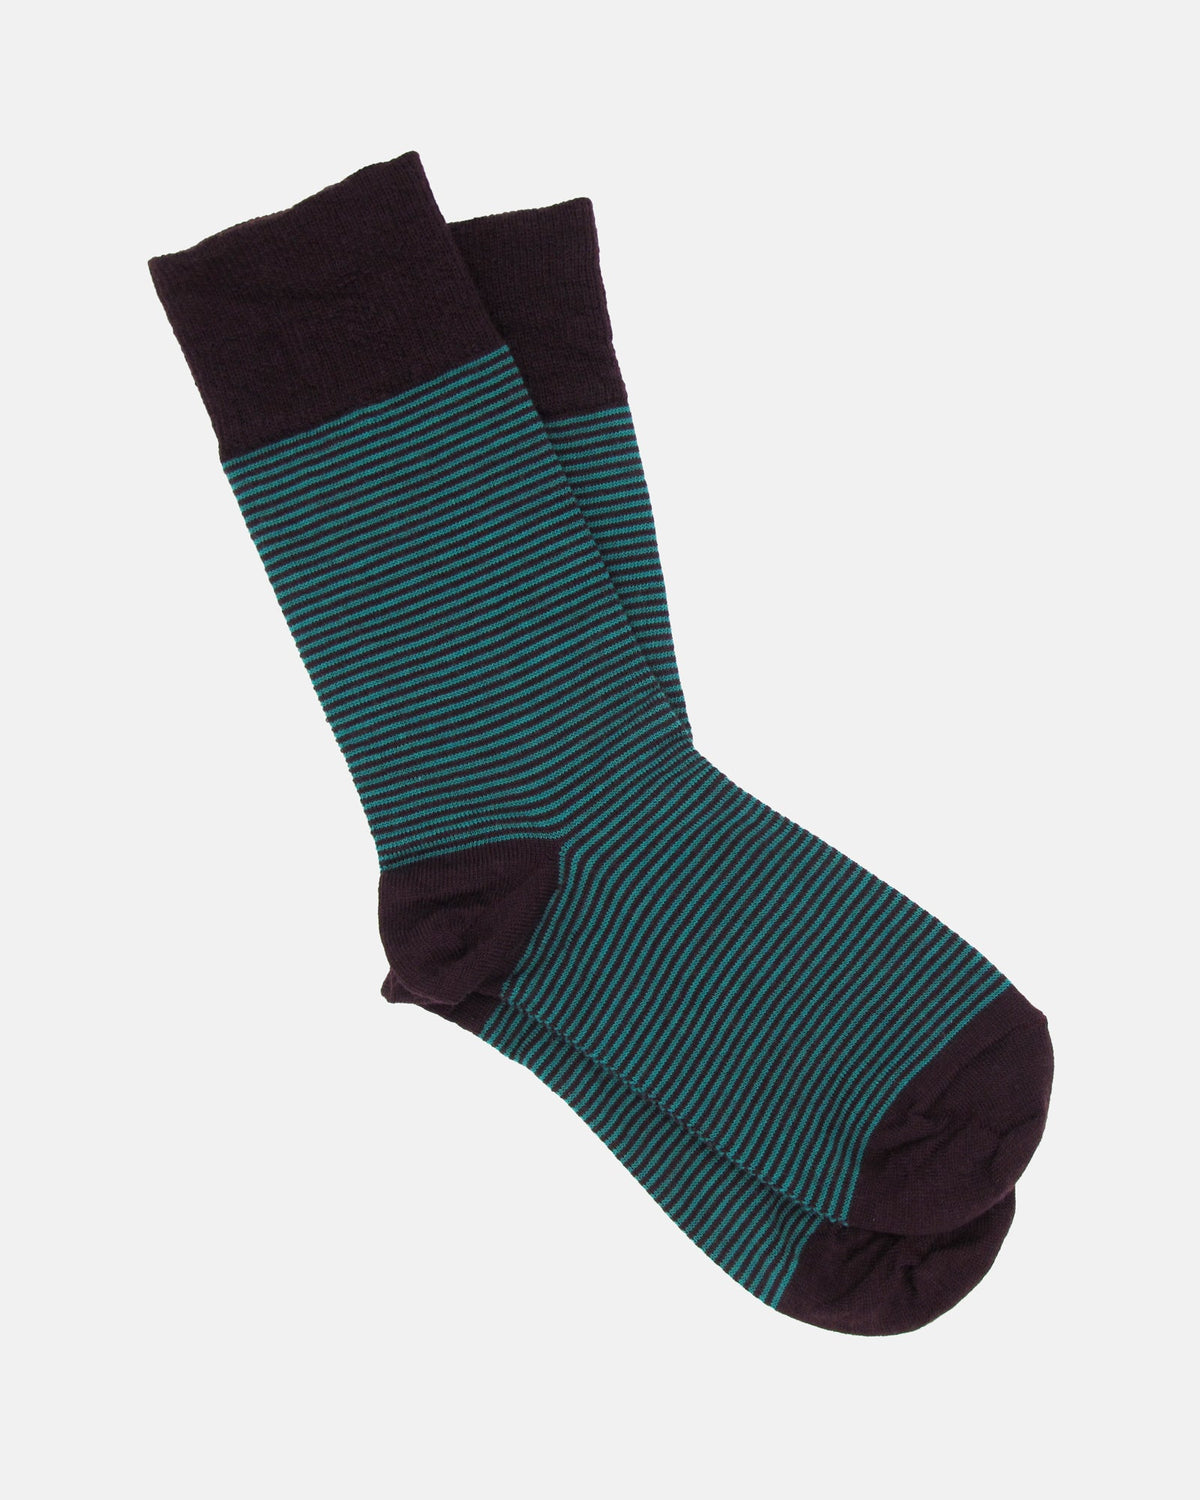 Pencil Stripe Wool Socks - Aubergine/Arsenic - BRIT LOCKER